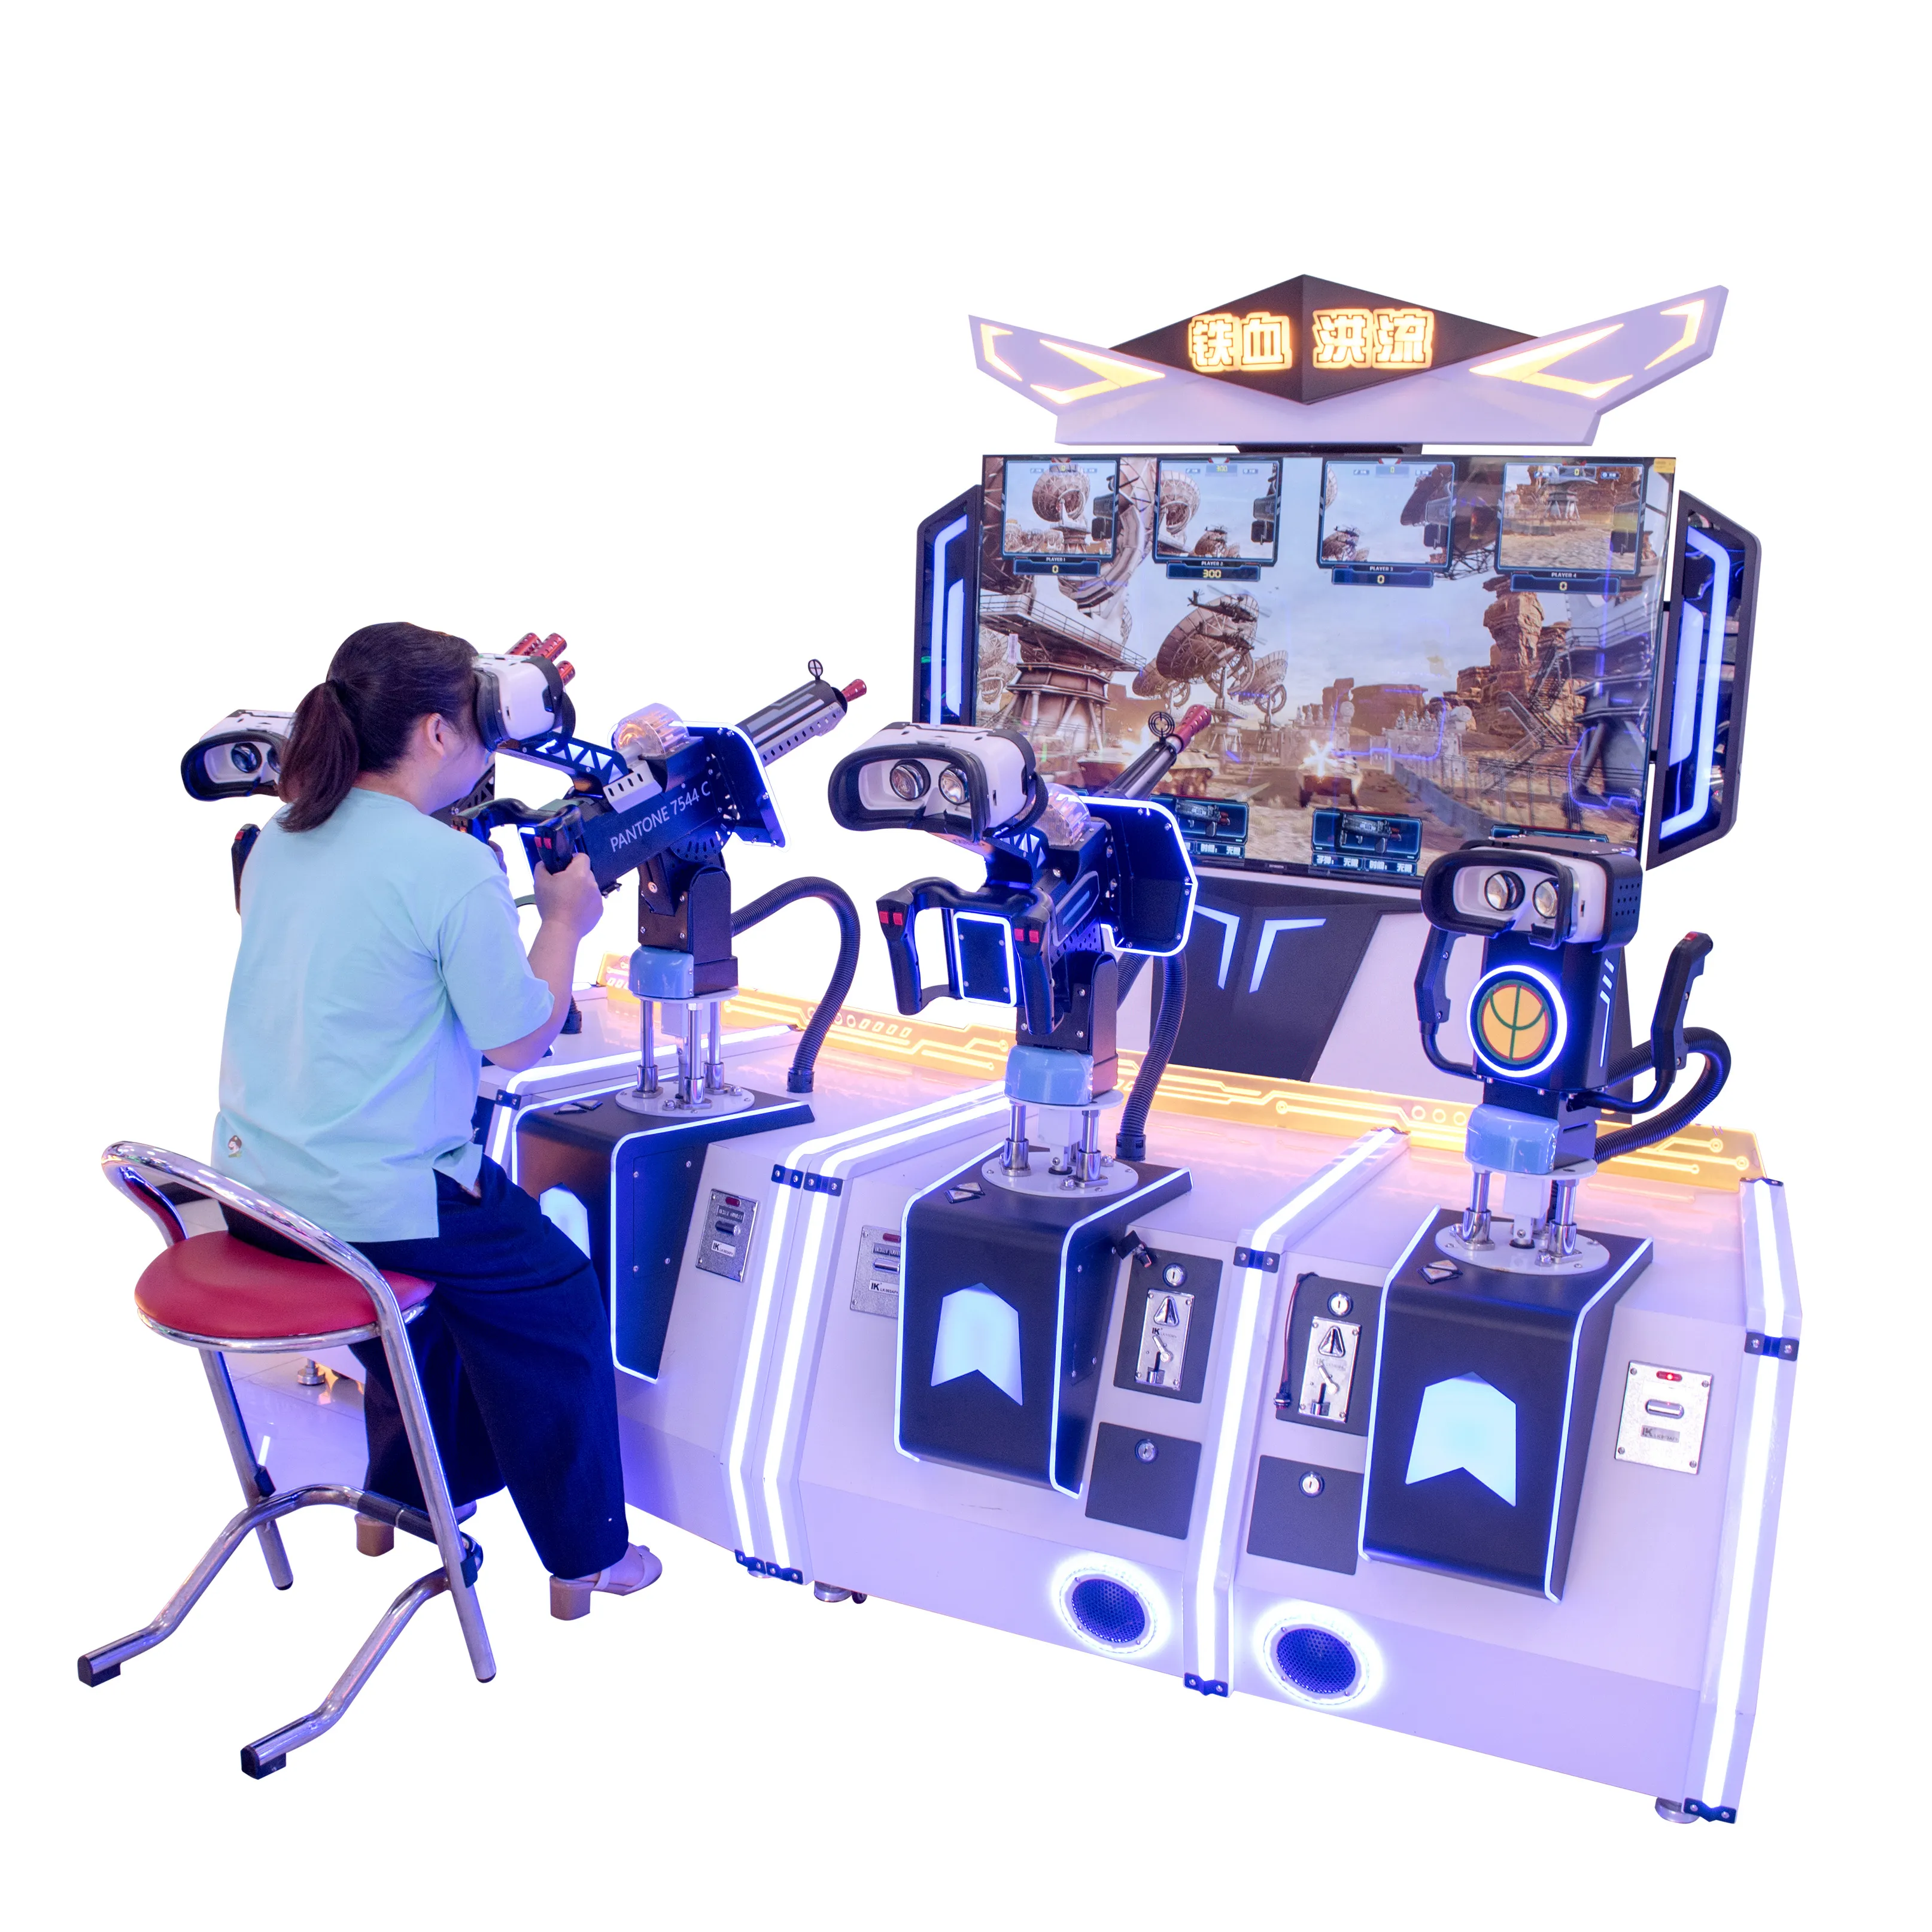 Vr/Ar/Mr Apparatuur 65 Inch Lcd Gun Shooting Game Machine Muntautomaat Arcade 4 Spelers Video Game Simulator Schietmachine